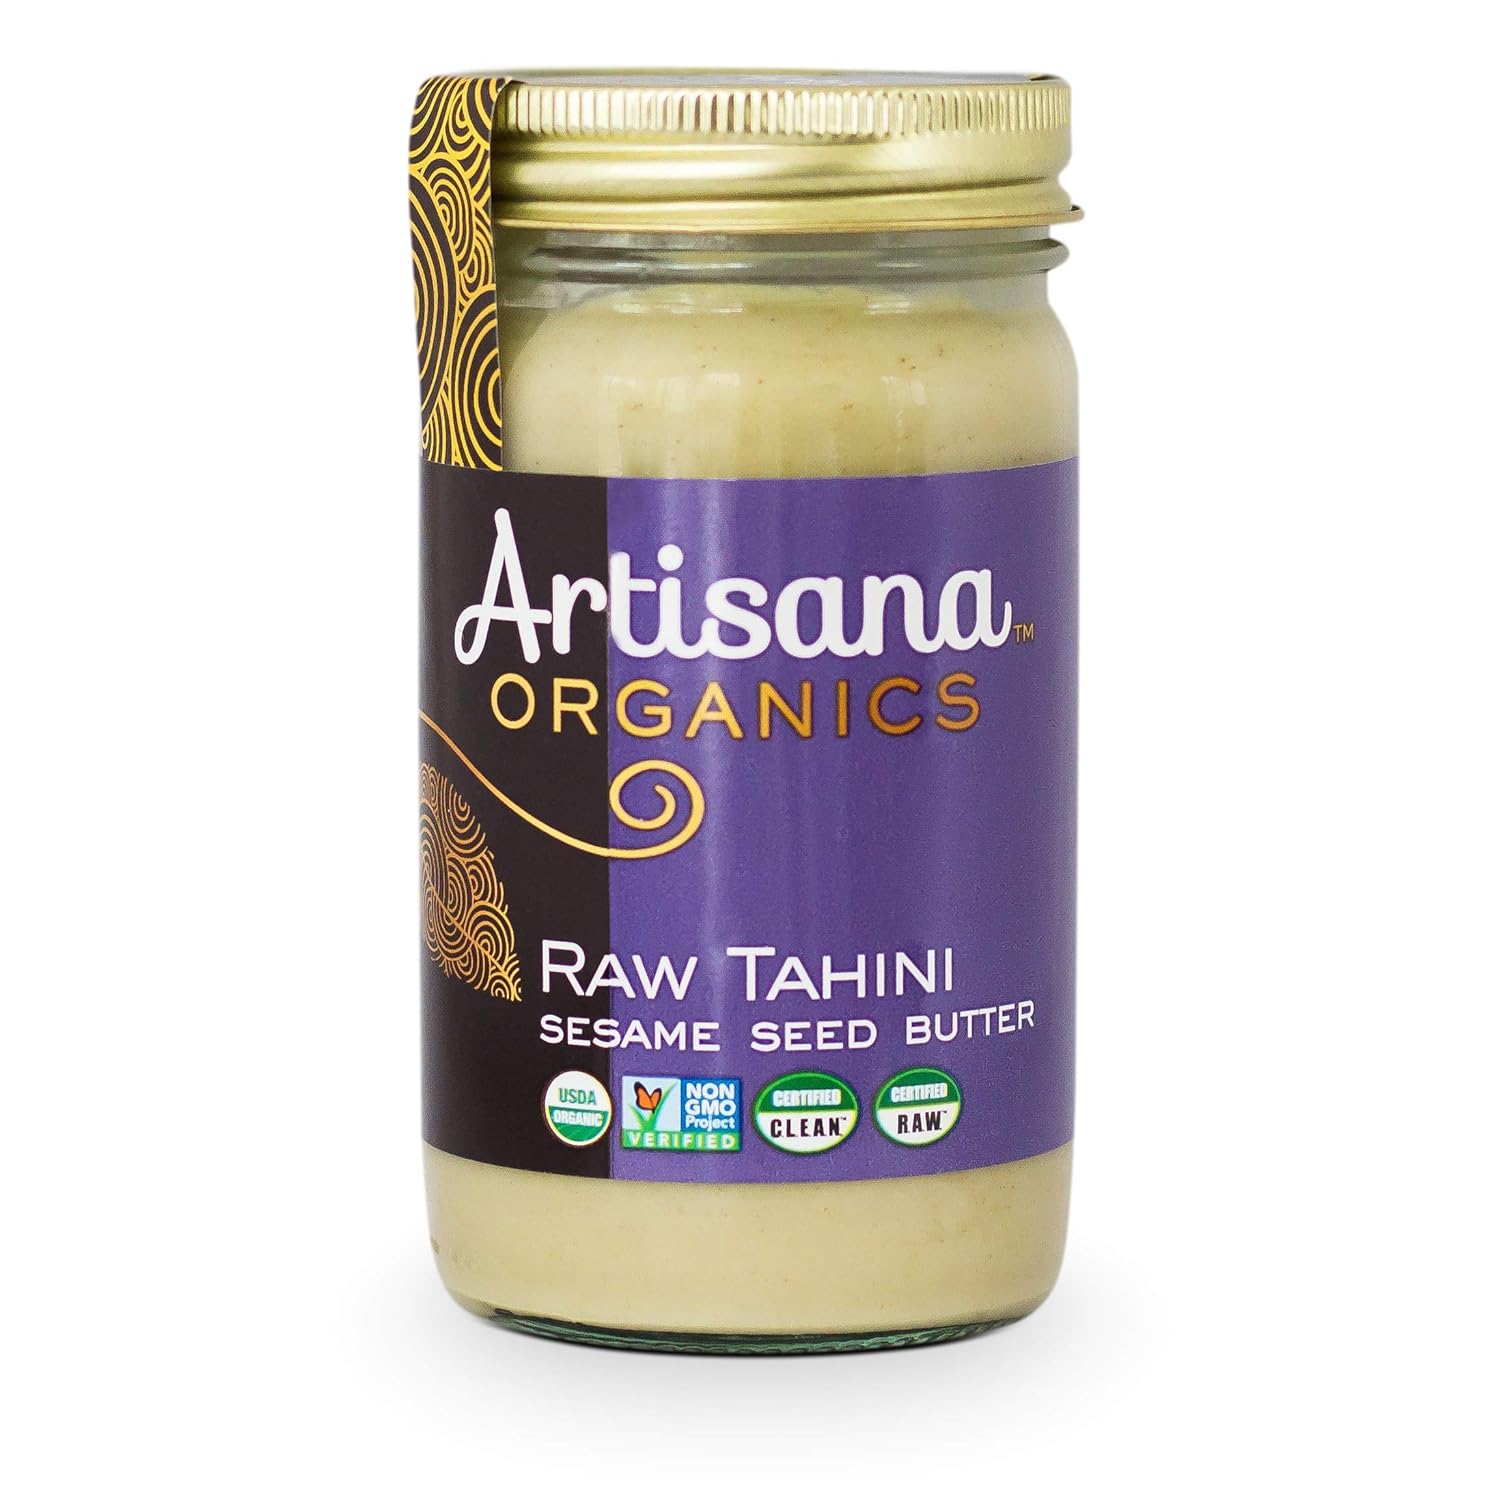 Artisana Organics Raw Tahini Sesame Seed Butter - Just One Ingredient, Unroasted, Vegan, Paleo and Keto Friendly, Non-GMO, 14oz Jar